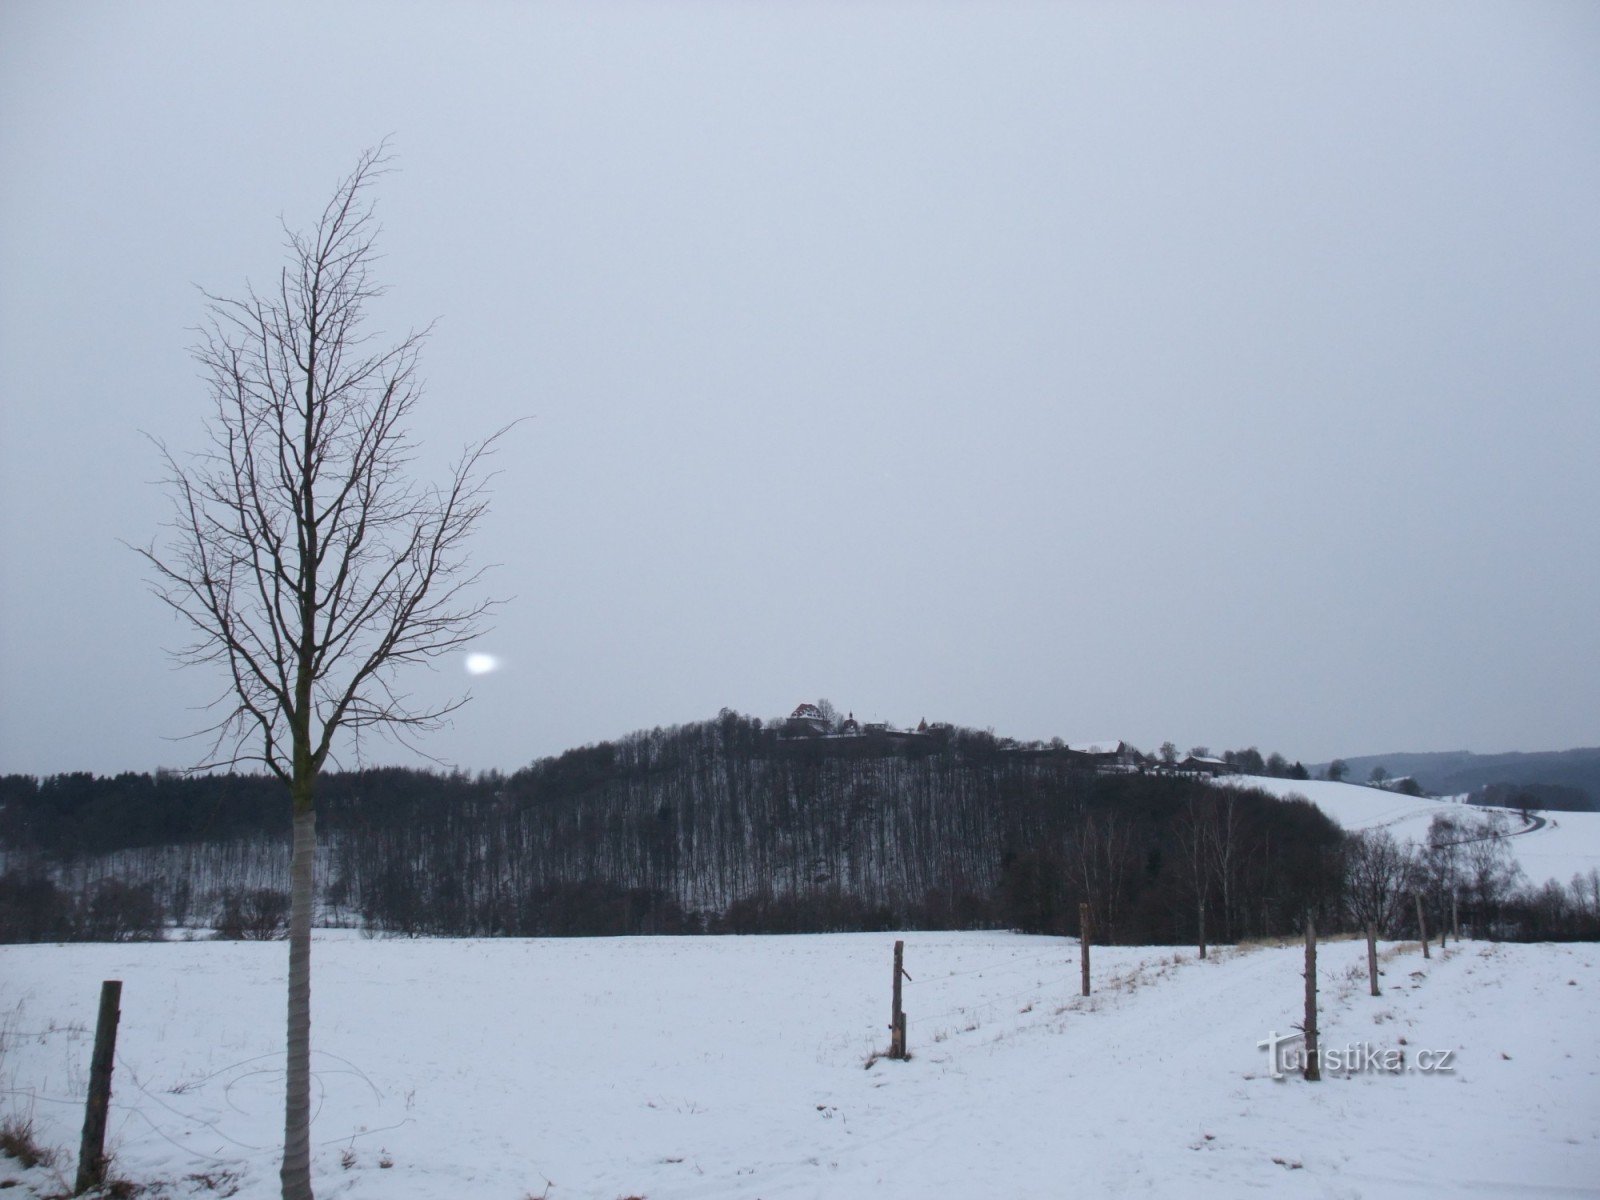 Pogled na Hohenberg, 1 km stran